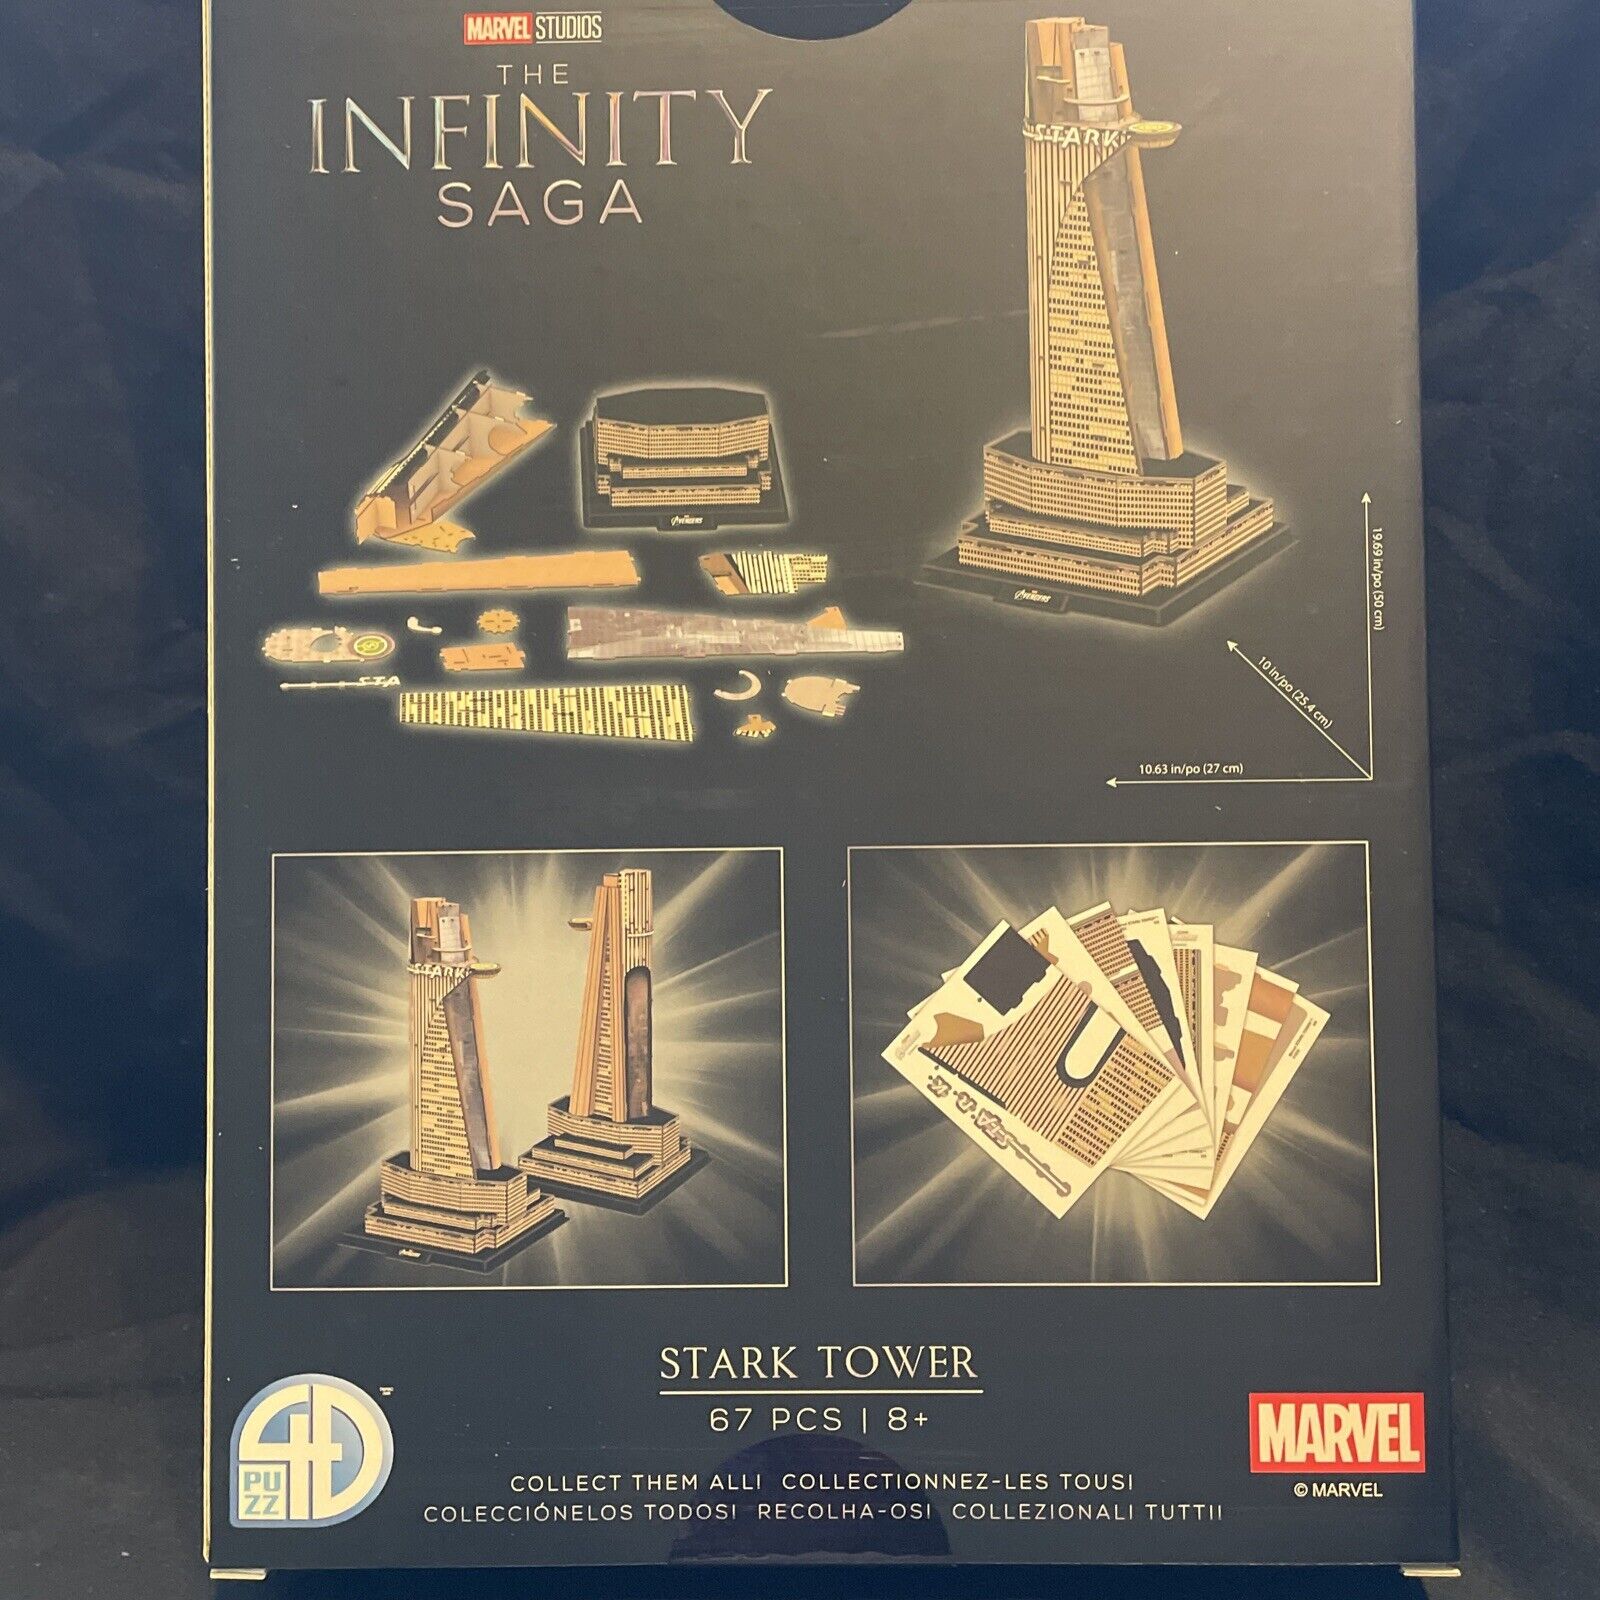 Marvel Avengers Tower 3D Puzzle